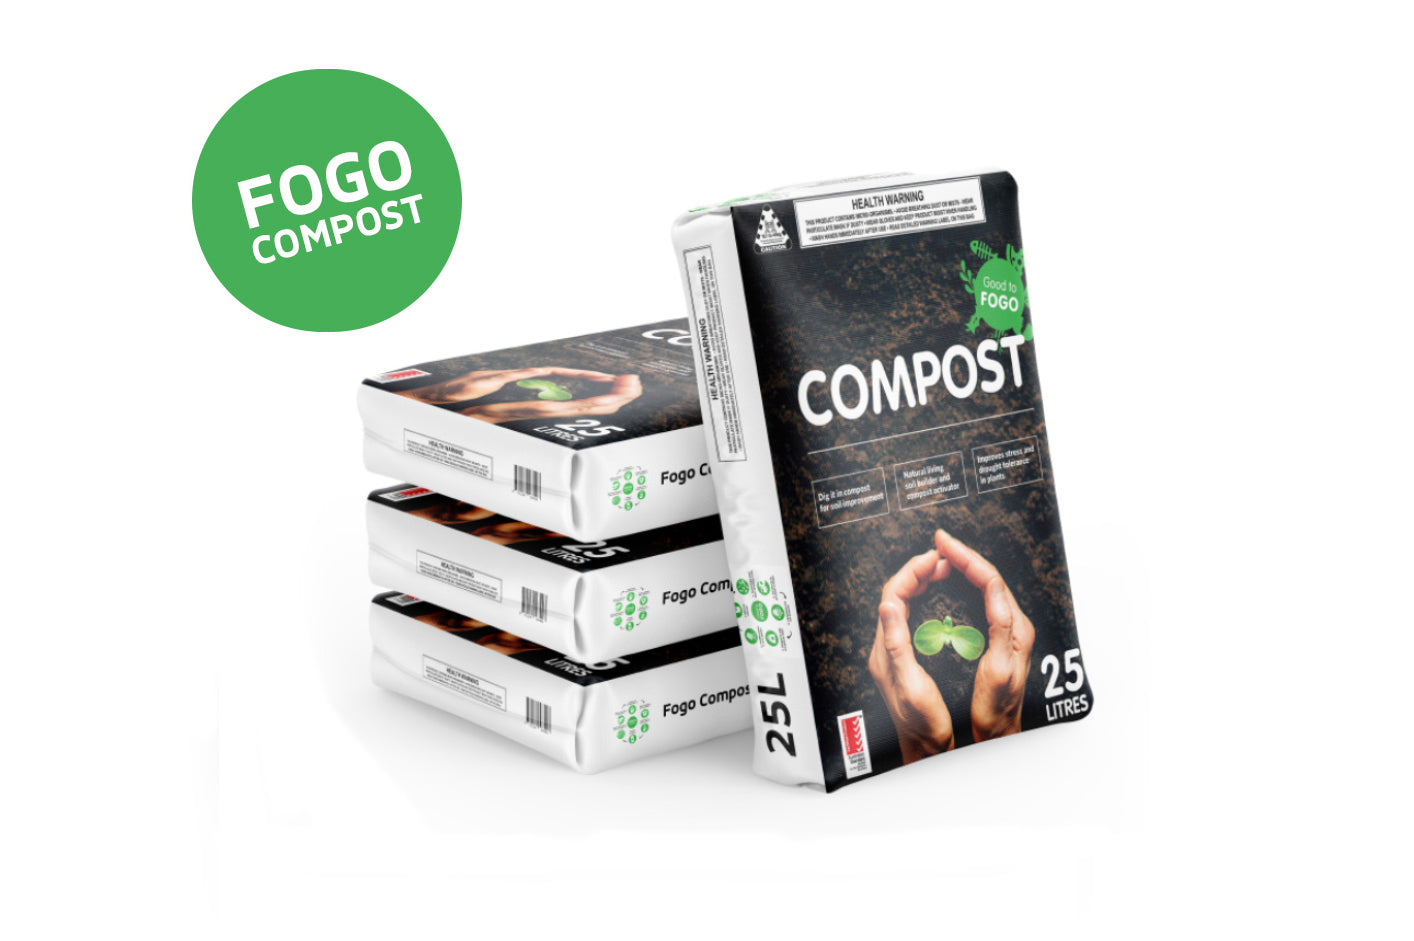 FOGO Compost: Closing the Loop